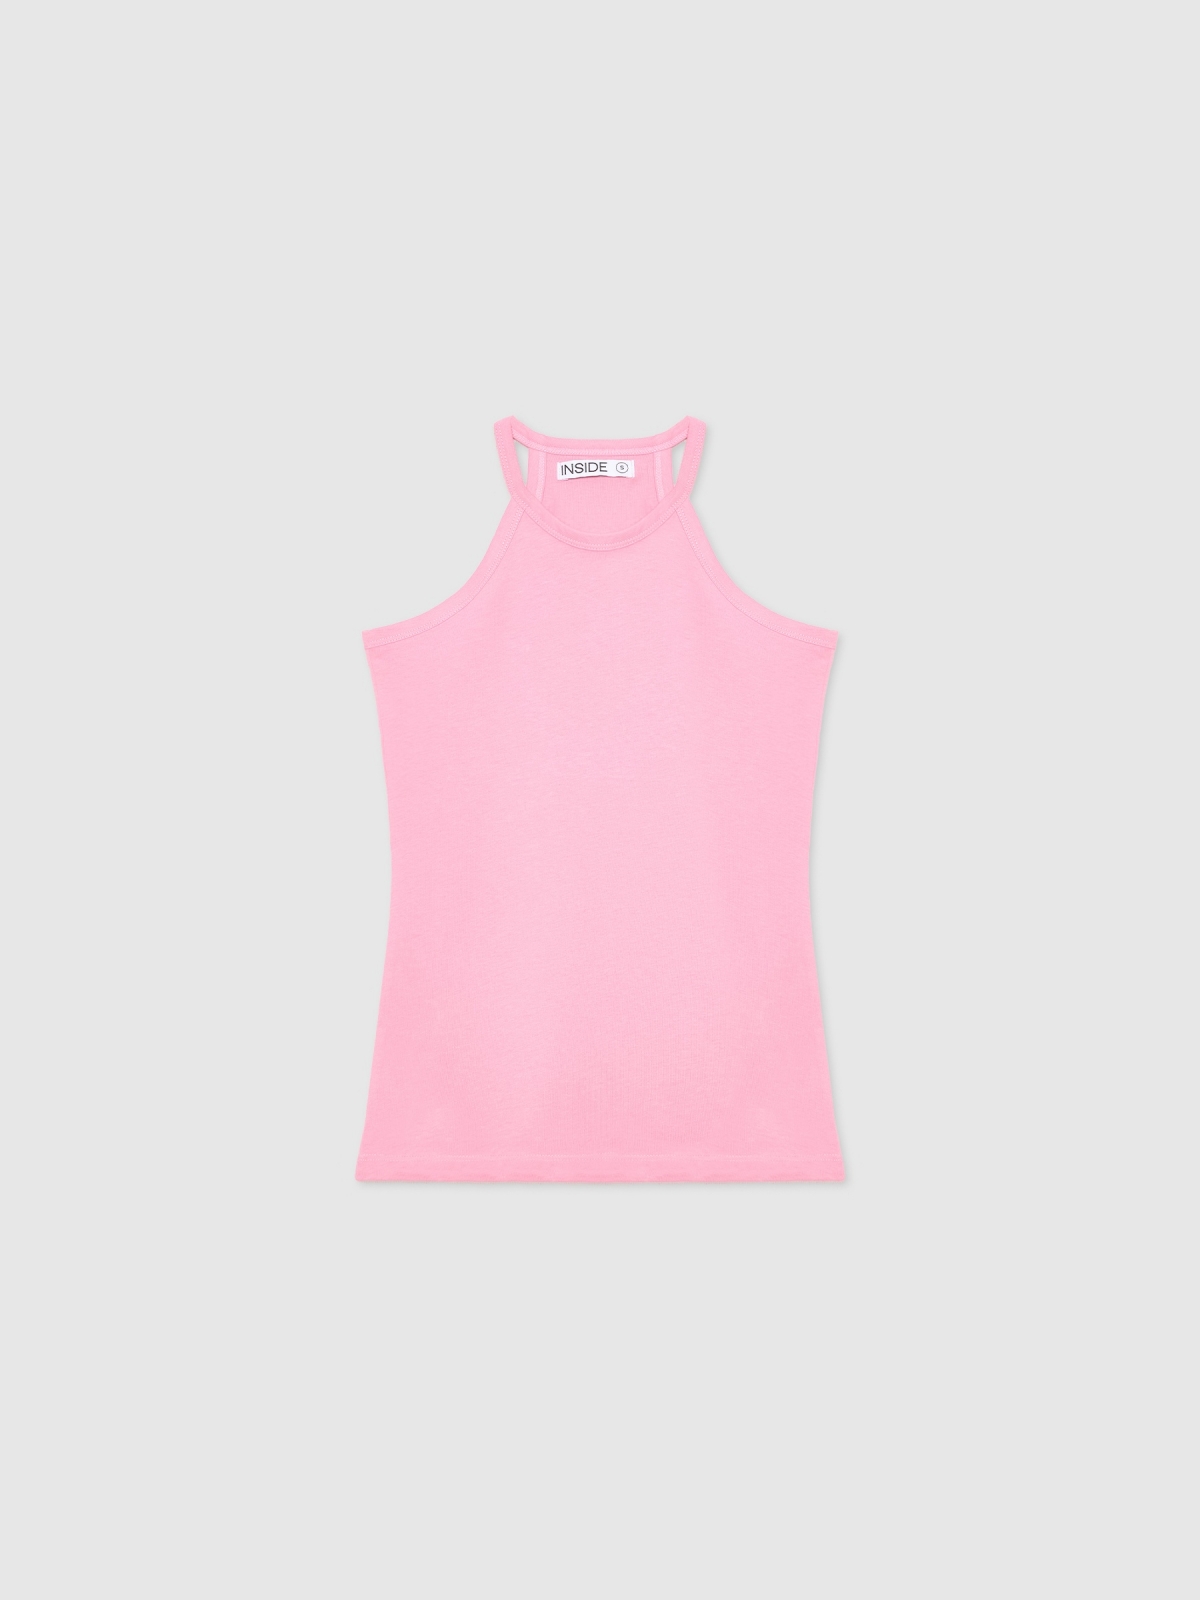  Camiseta básica cuello halter rosa claro